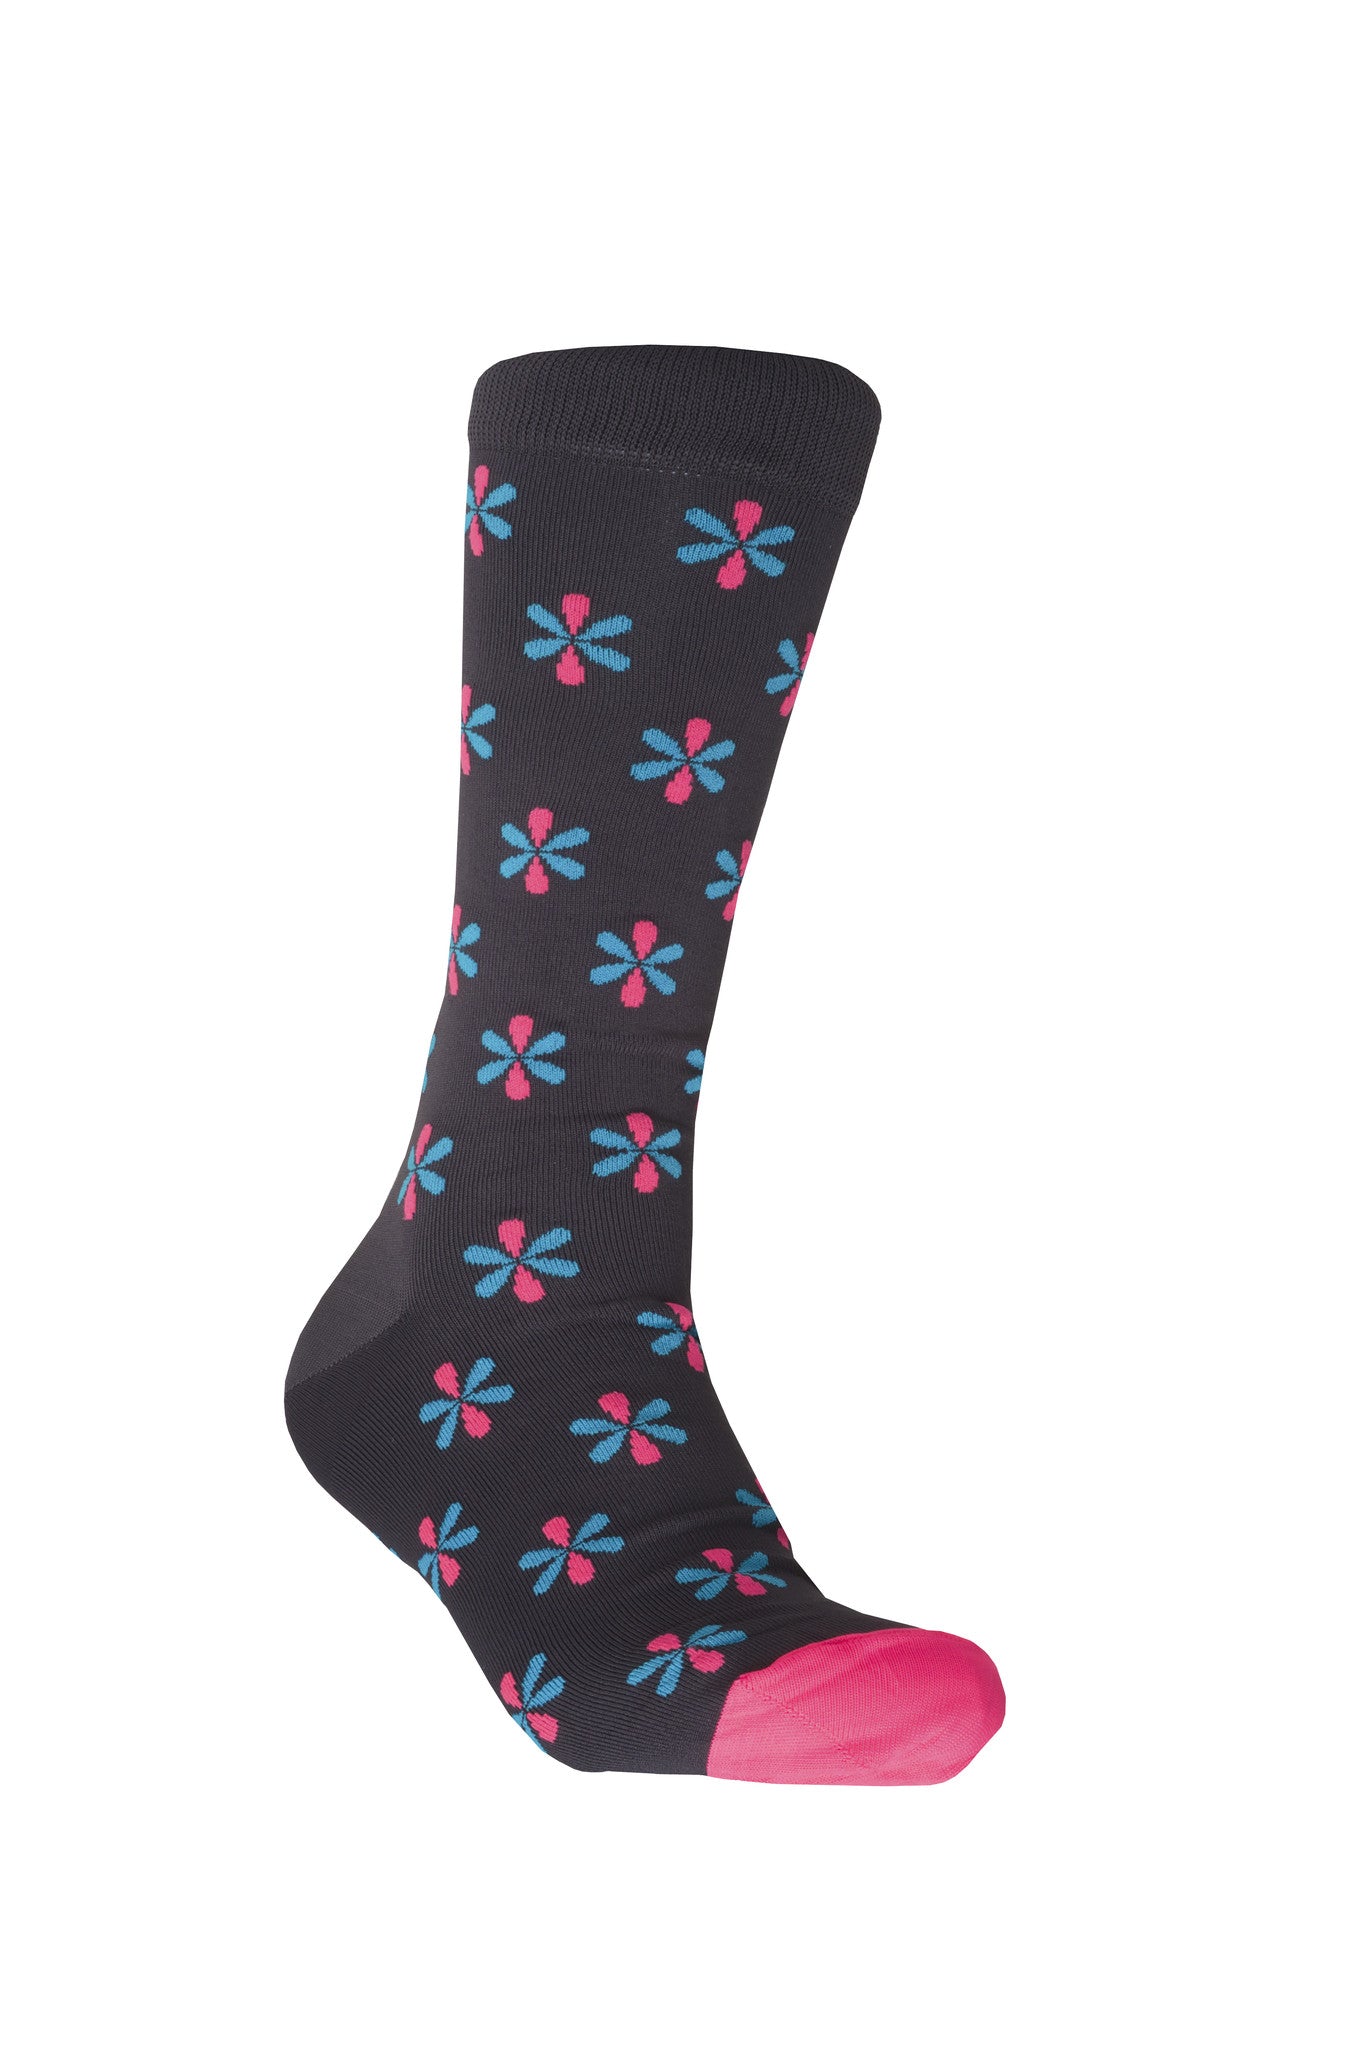 Giraffecool-Giraffe-Cool-Brand-Dark-Grey-Blue-And-Pink-Flowers-Microfiber-Fashion-Socks-Front